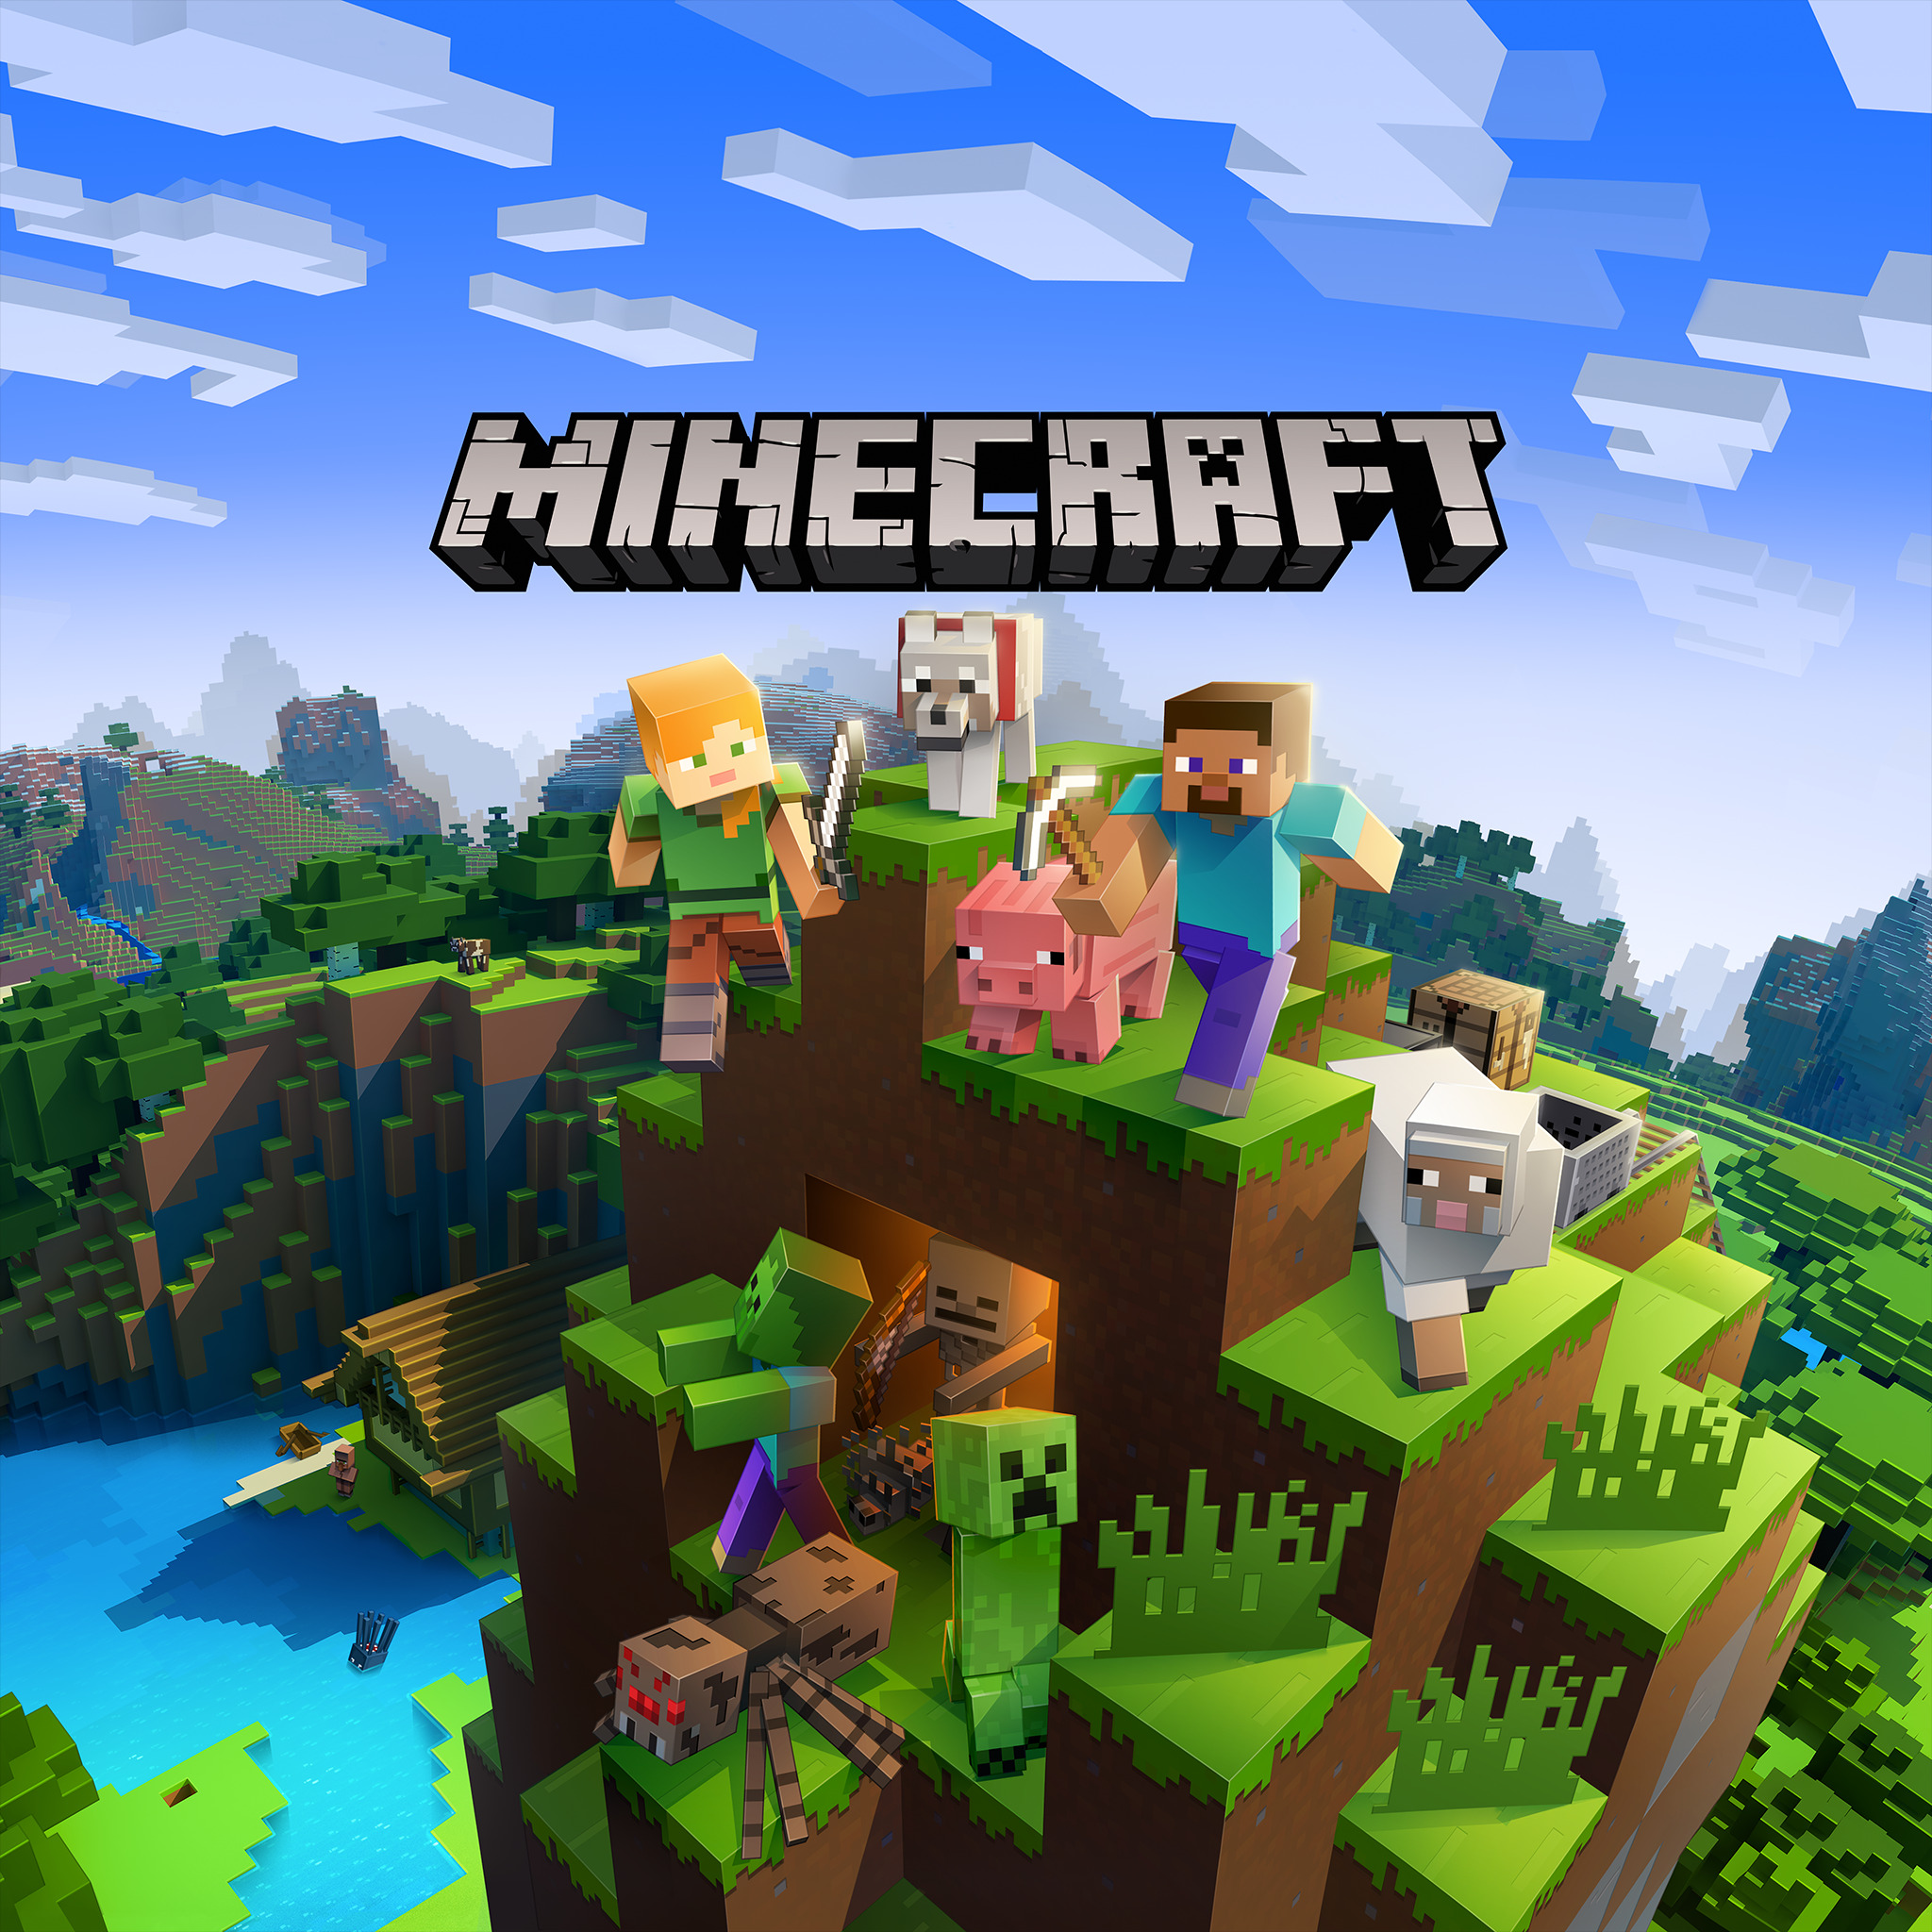 Minecraft Legends Box Shot for Xbox One - GameFAQs